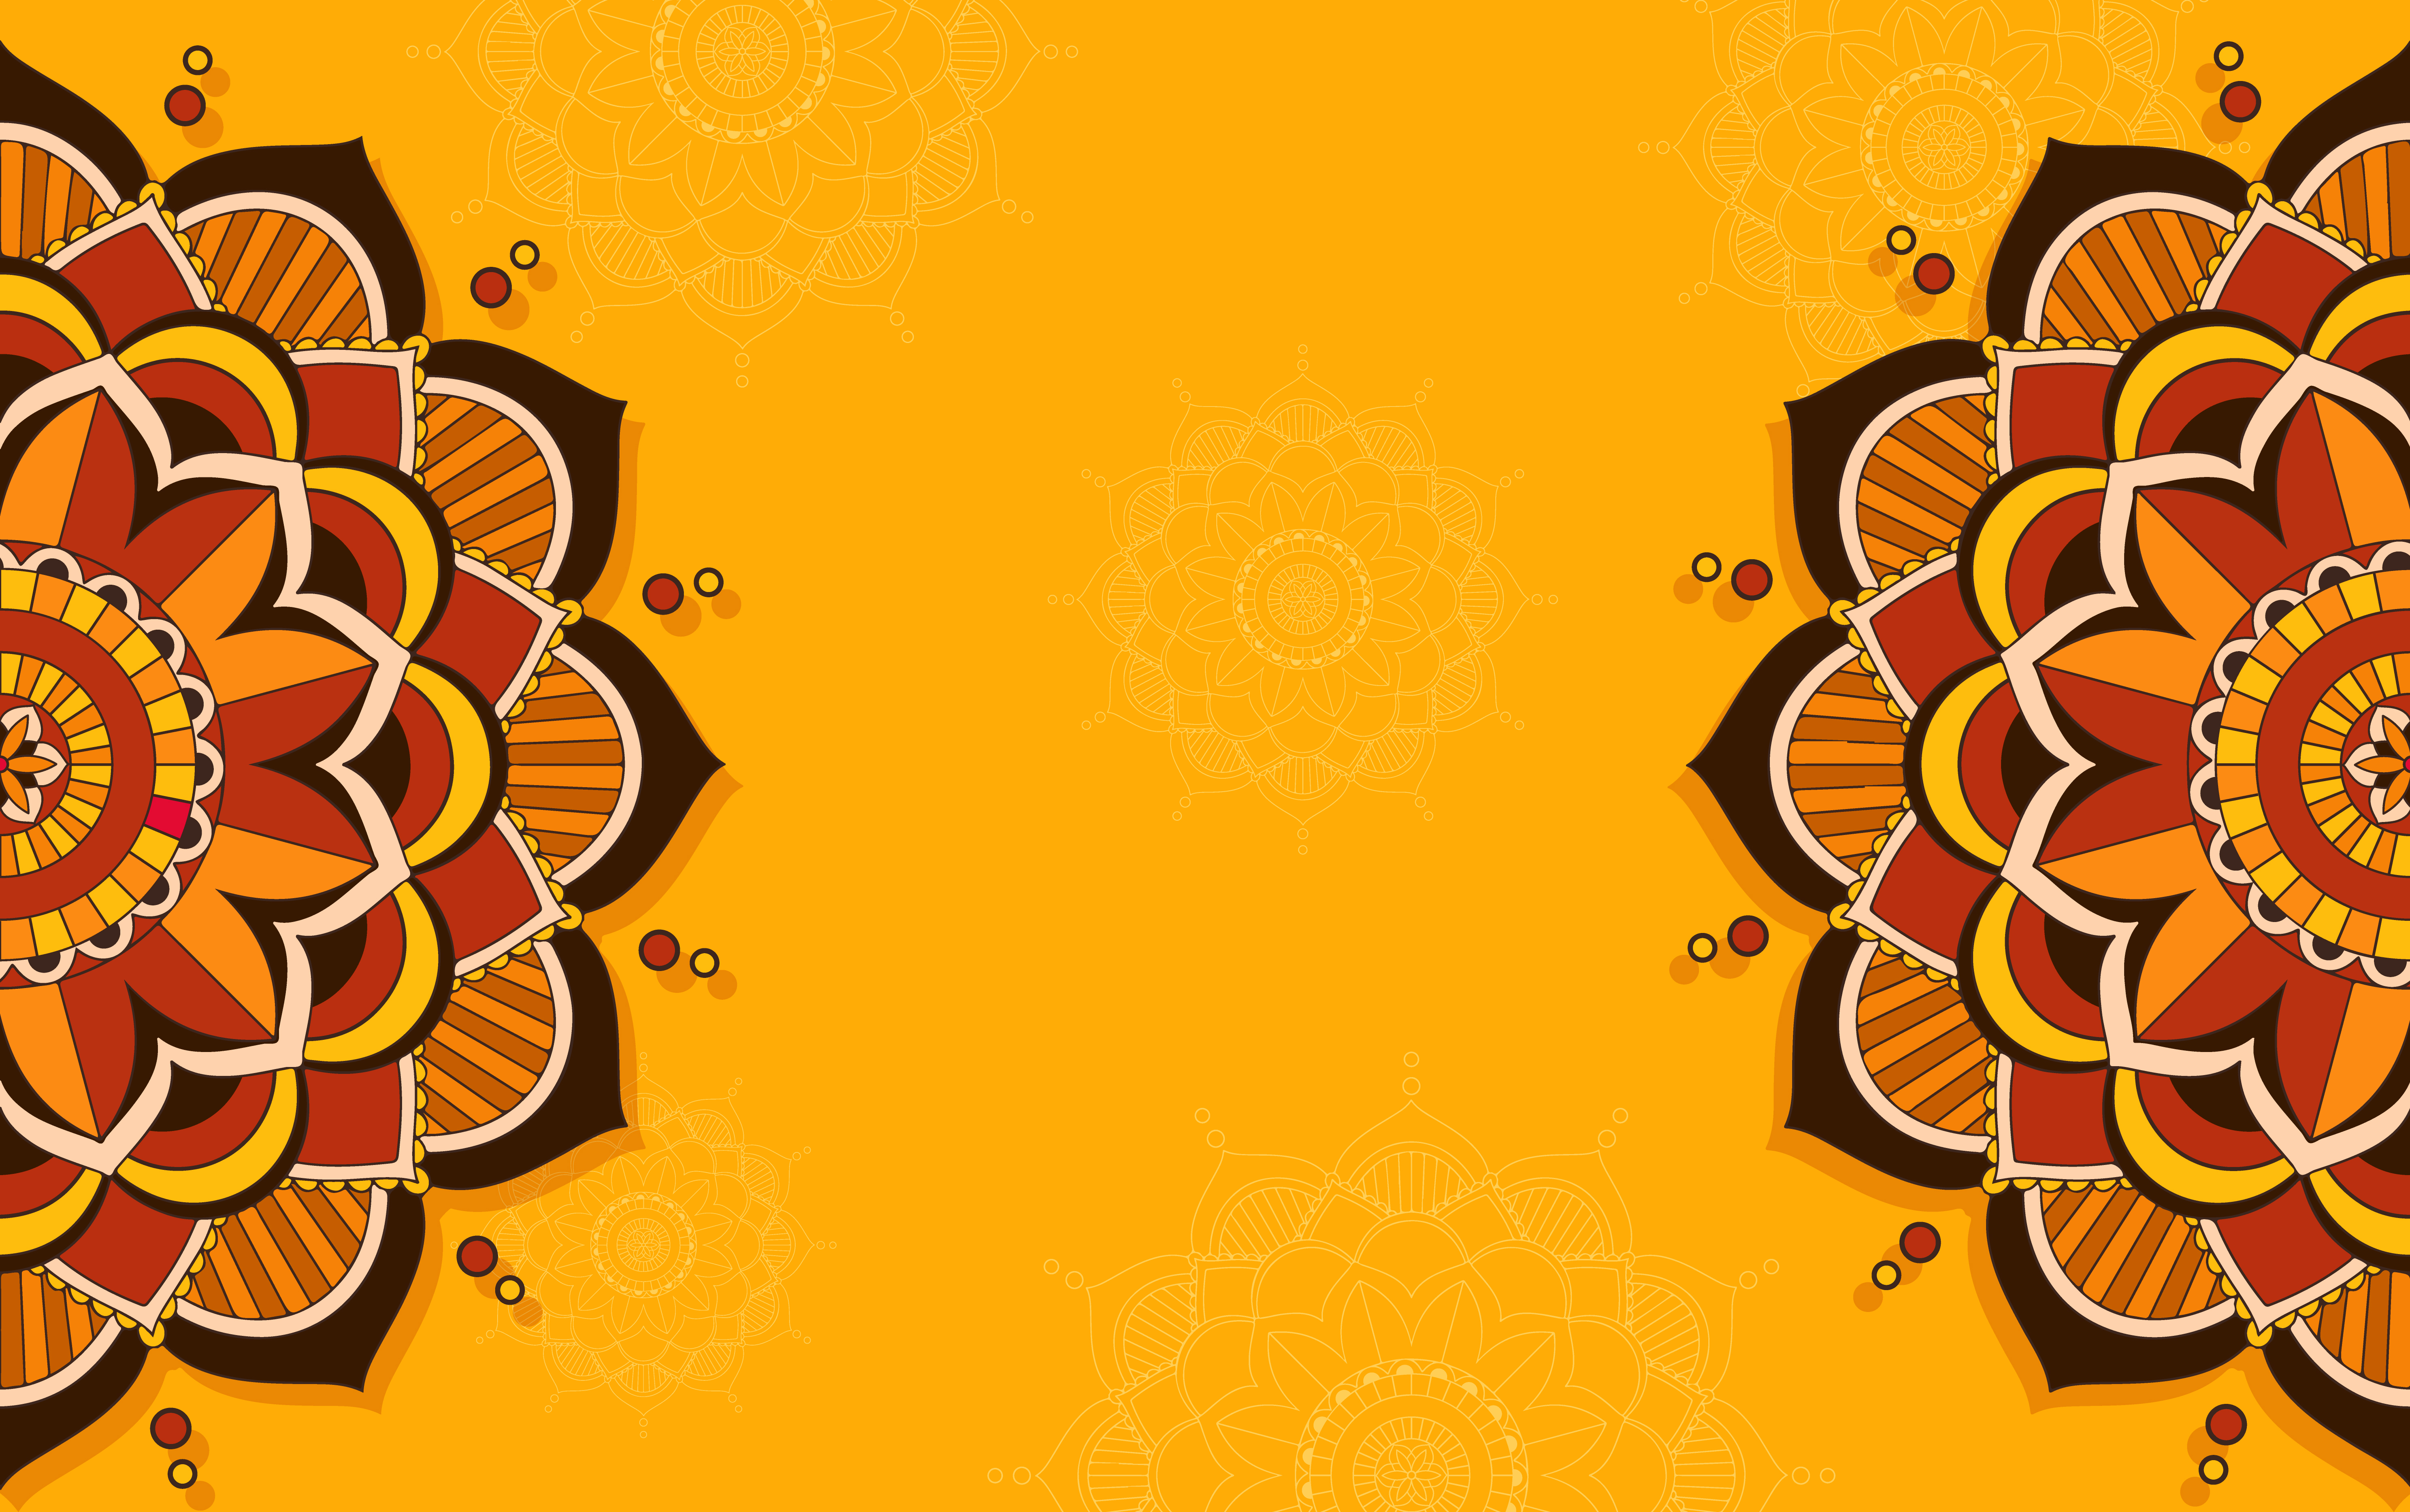 Yellow Orange Background Design With Mandala Patterns Vector Art At Vecteezy